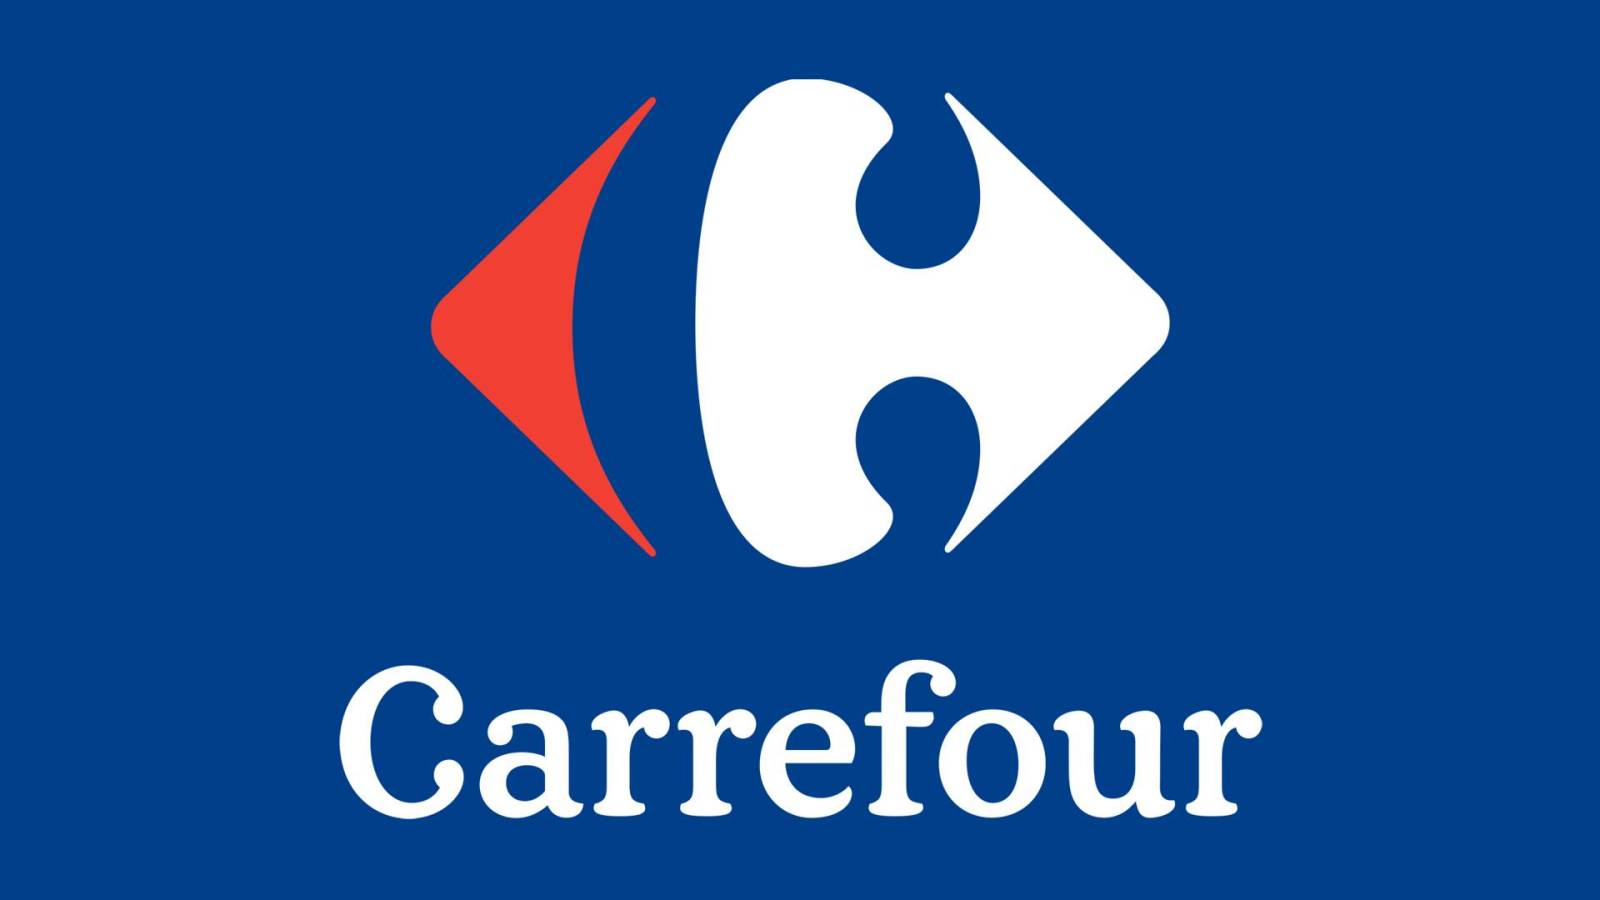 Carrefour viitor